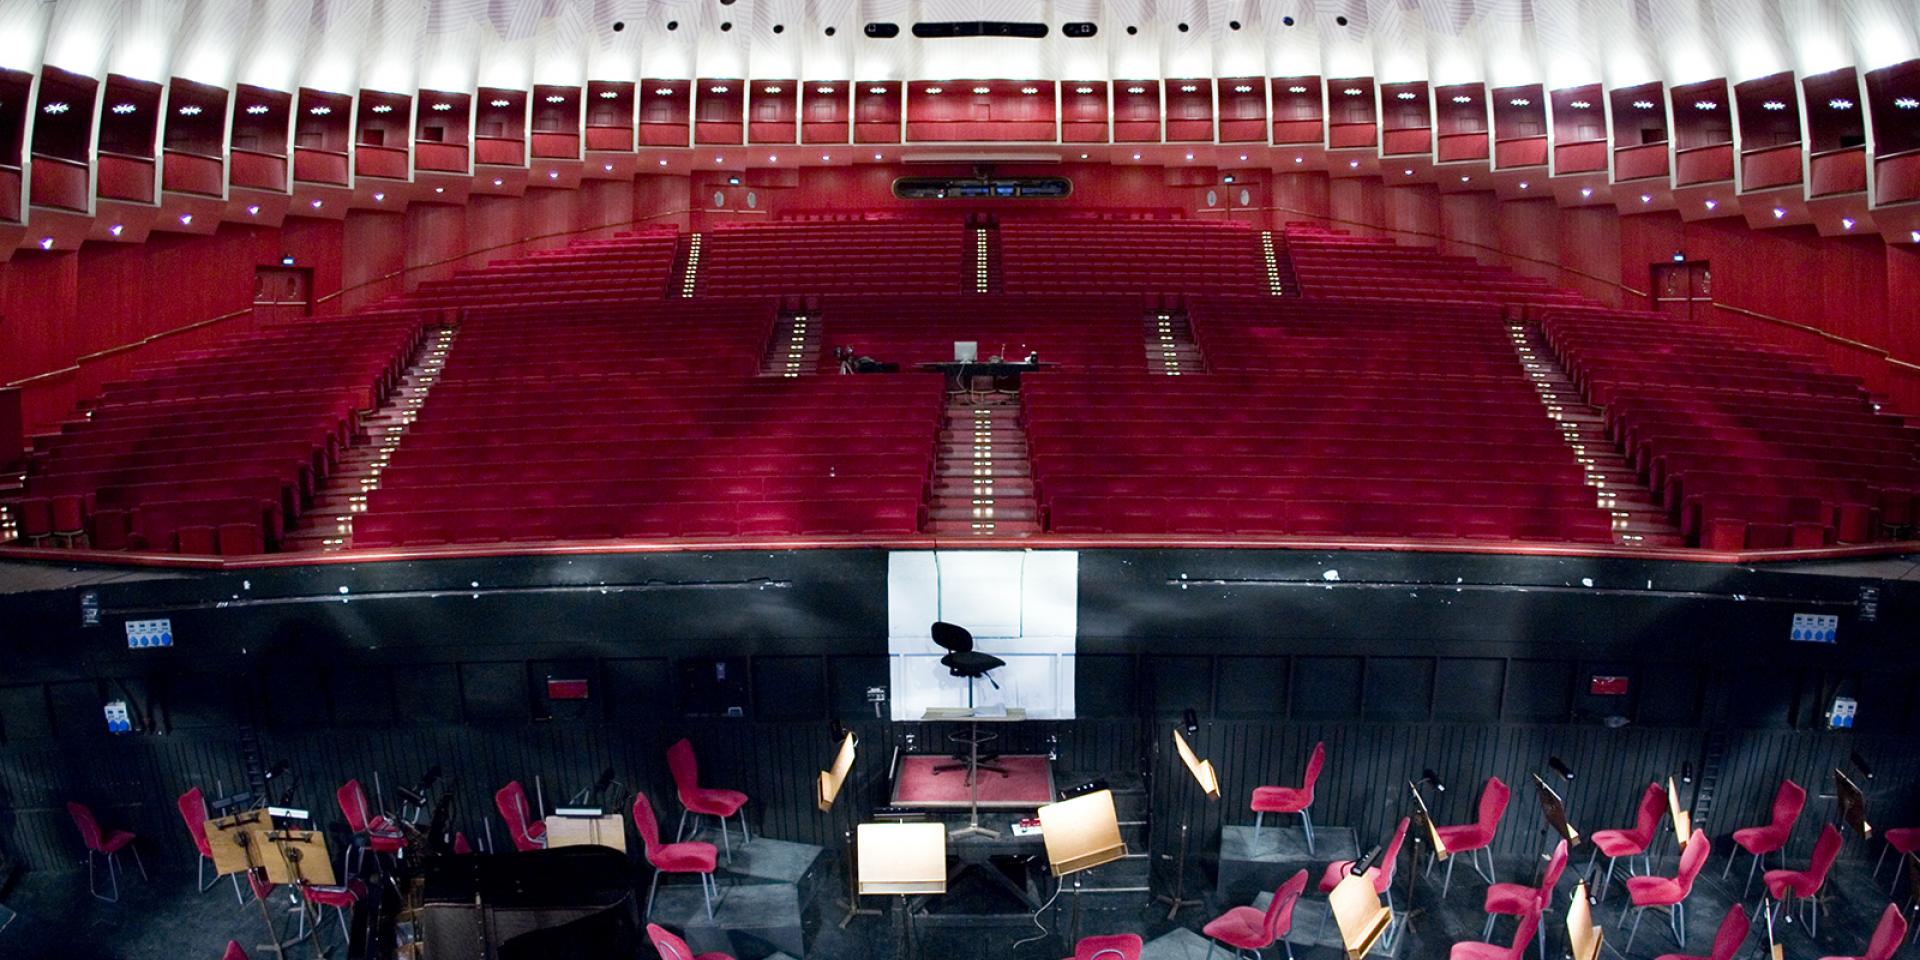 The Teatro Regio hall seen by the proscenium